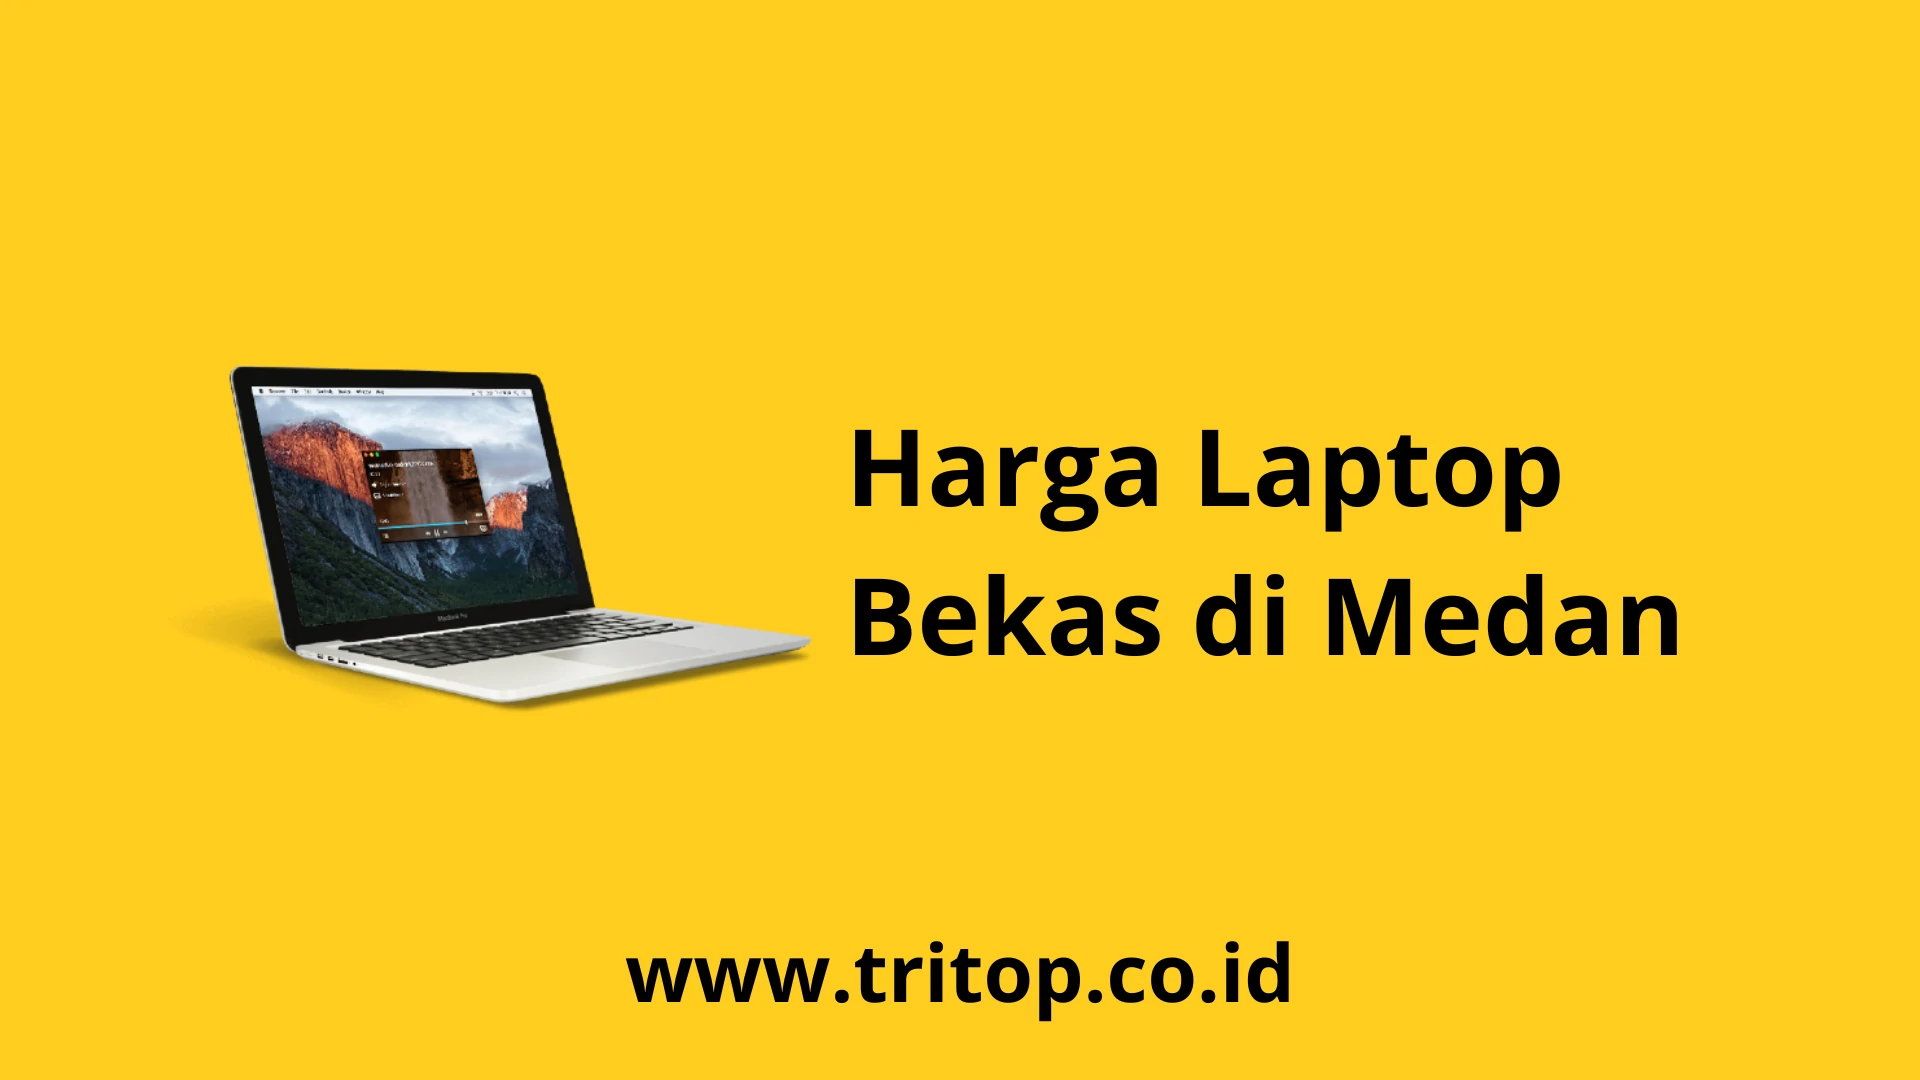 Harga Laptop Bekas di Medan Tritop.co.id